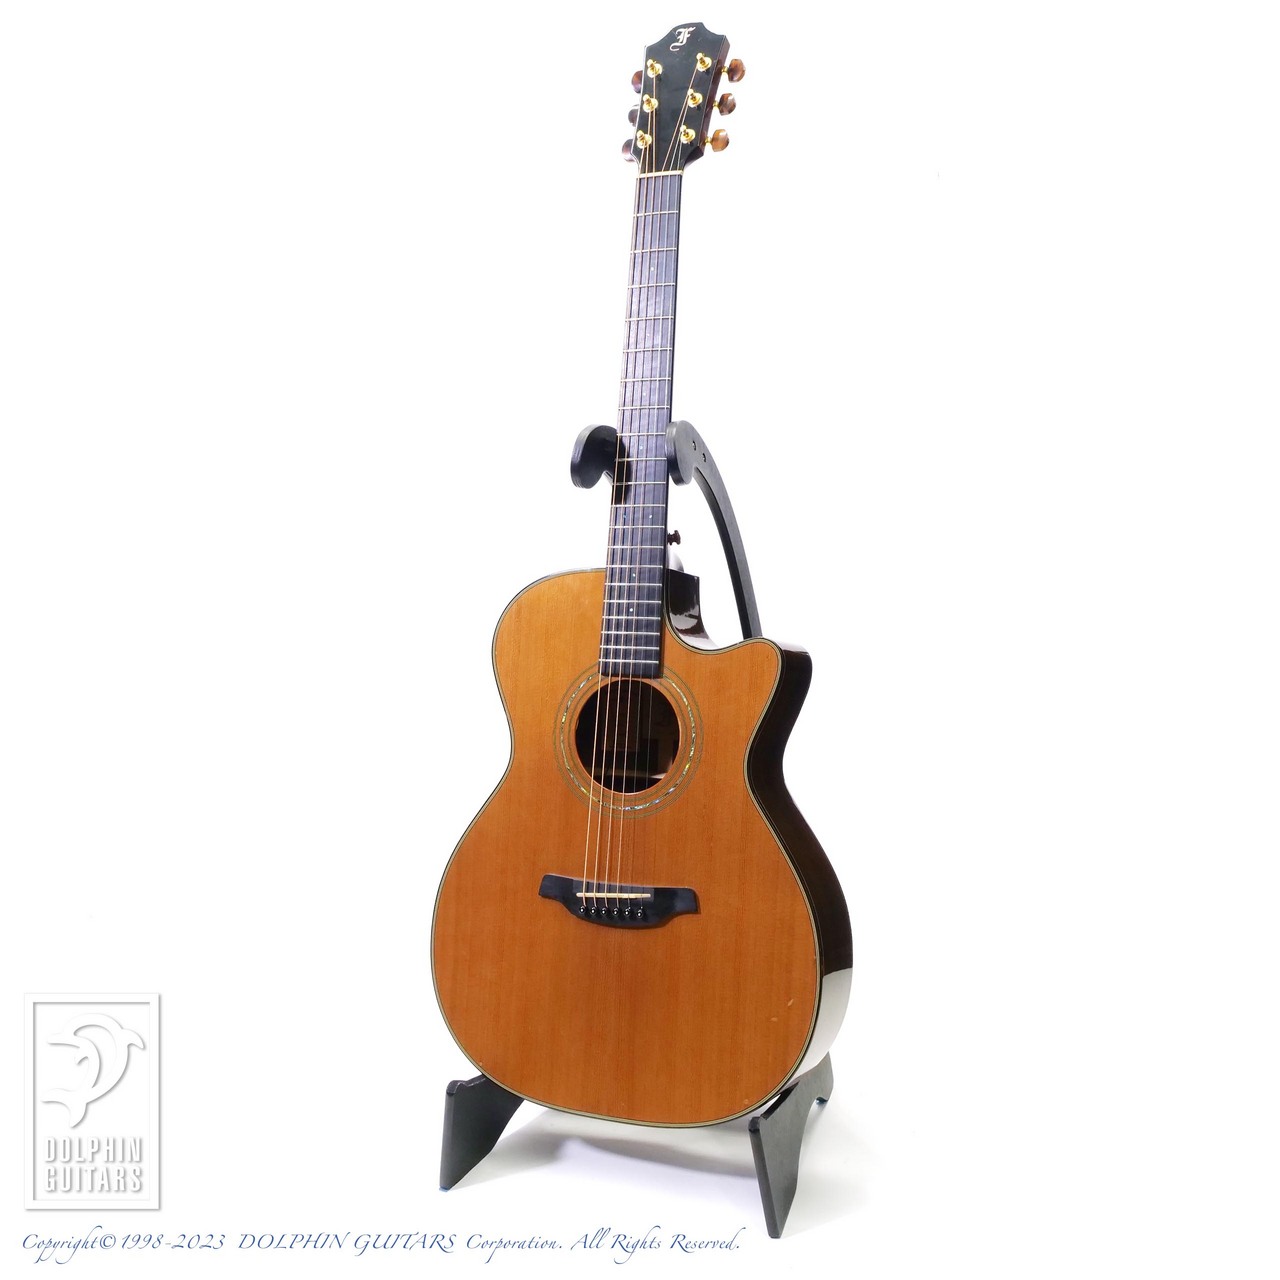 Furch OM23-CRCT  アコースティックギター